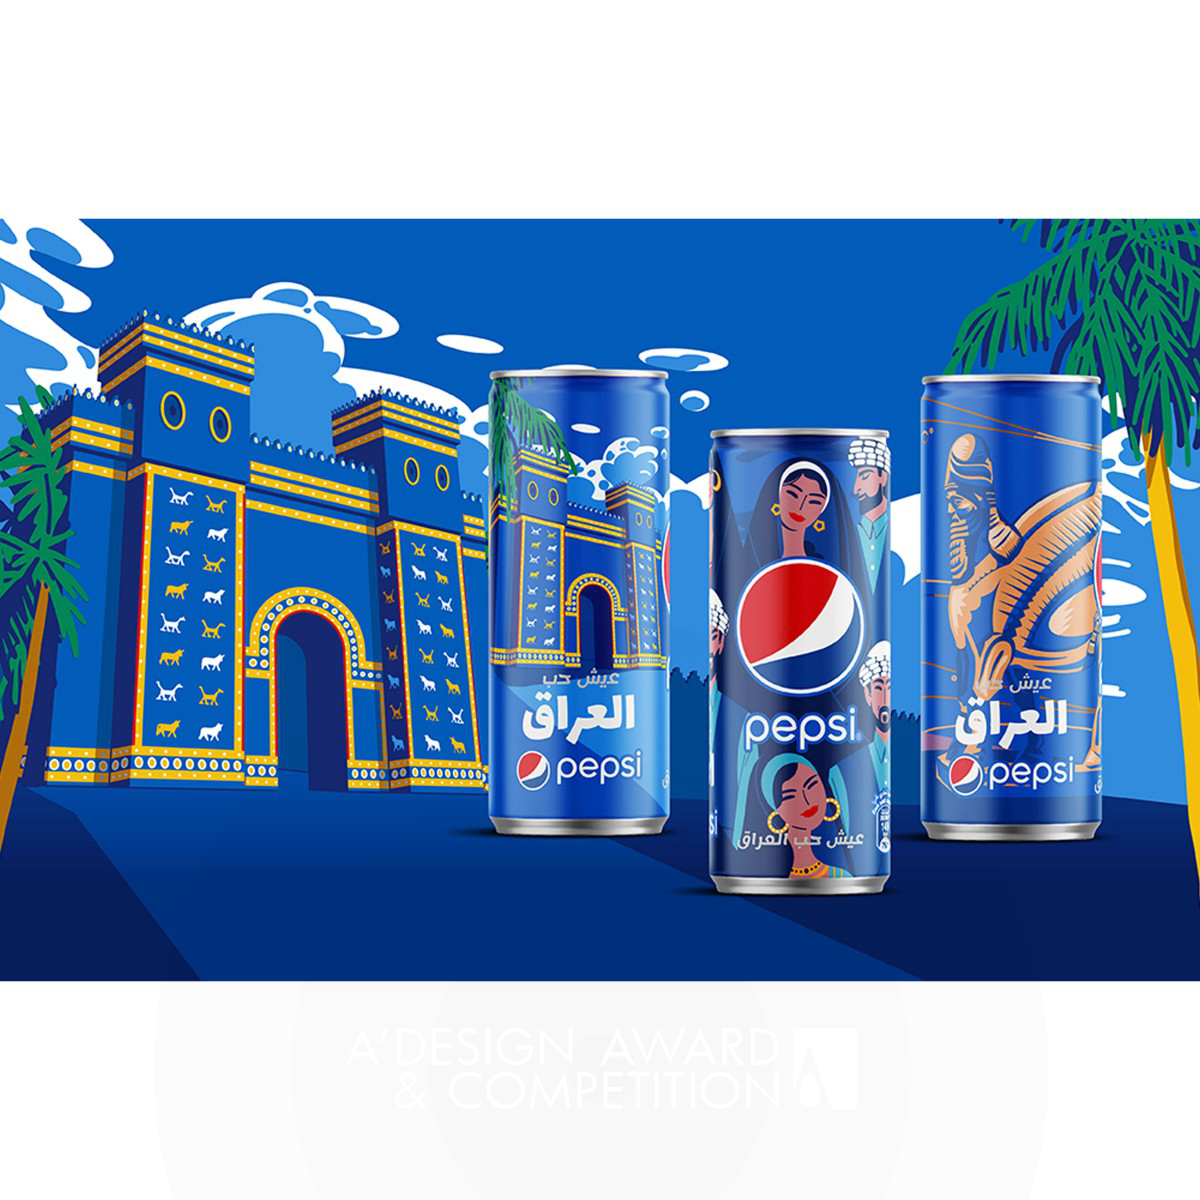 Pepsi Culture Can Series Beverage